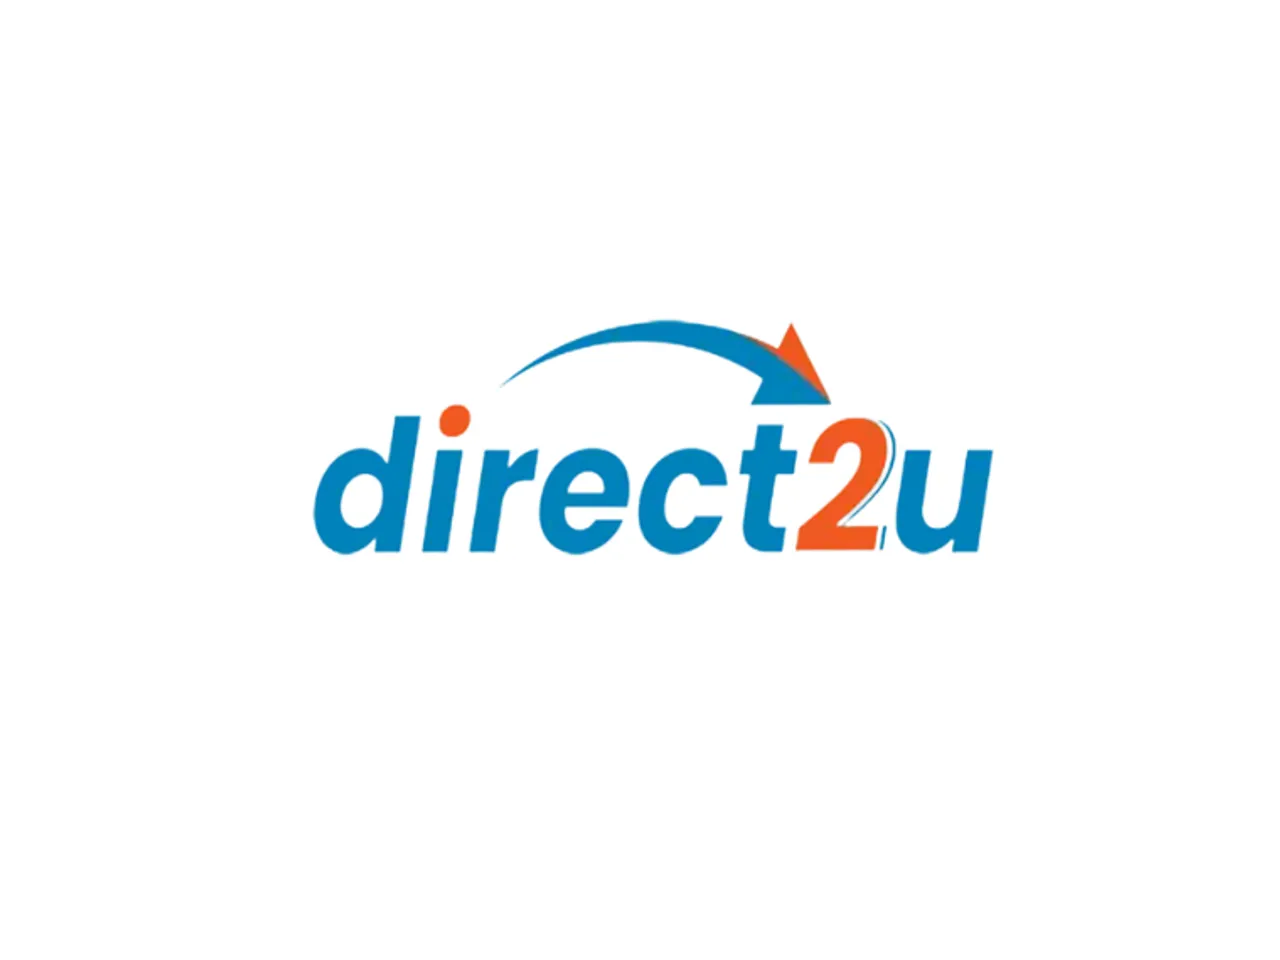 Direct2u logo